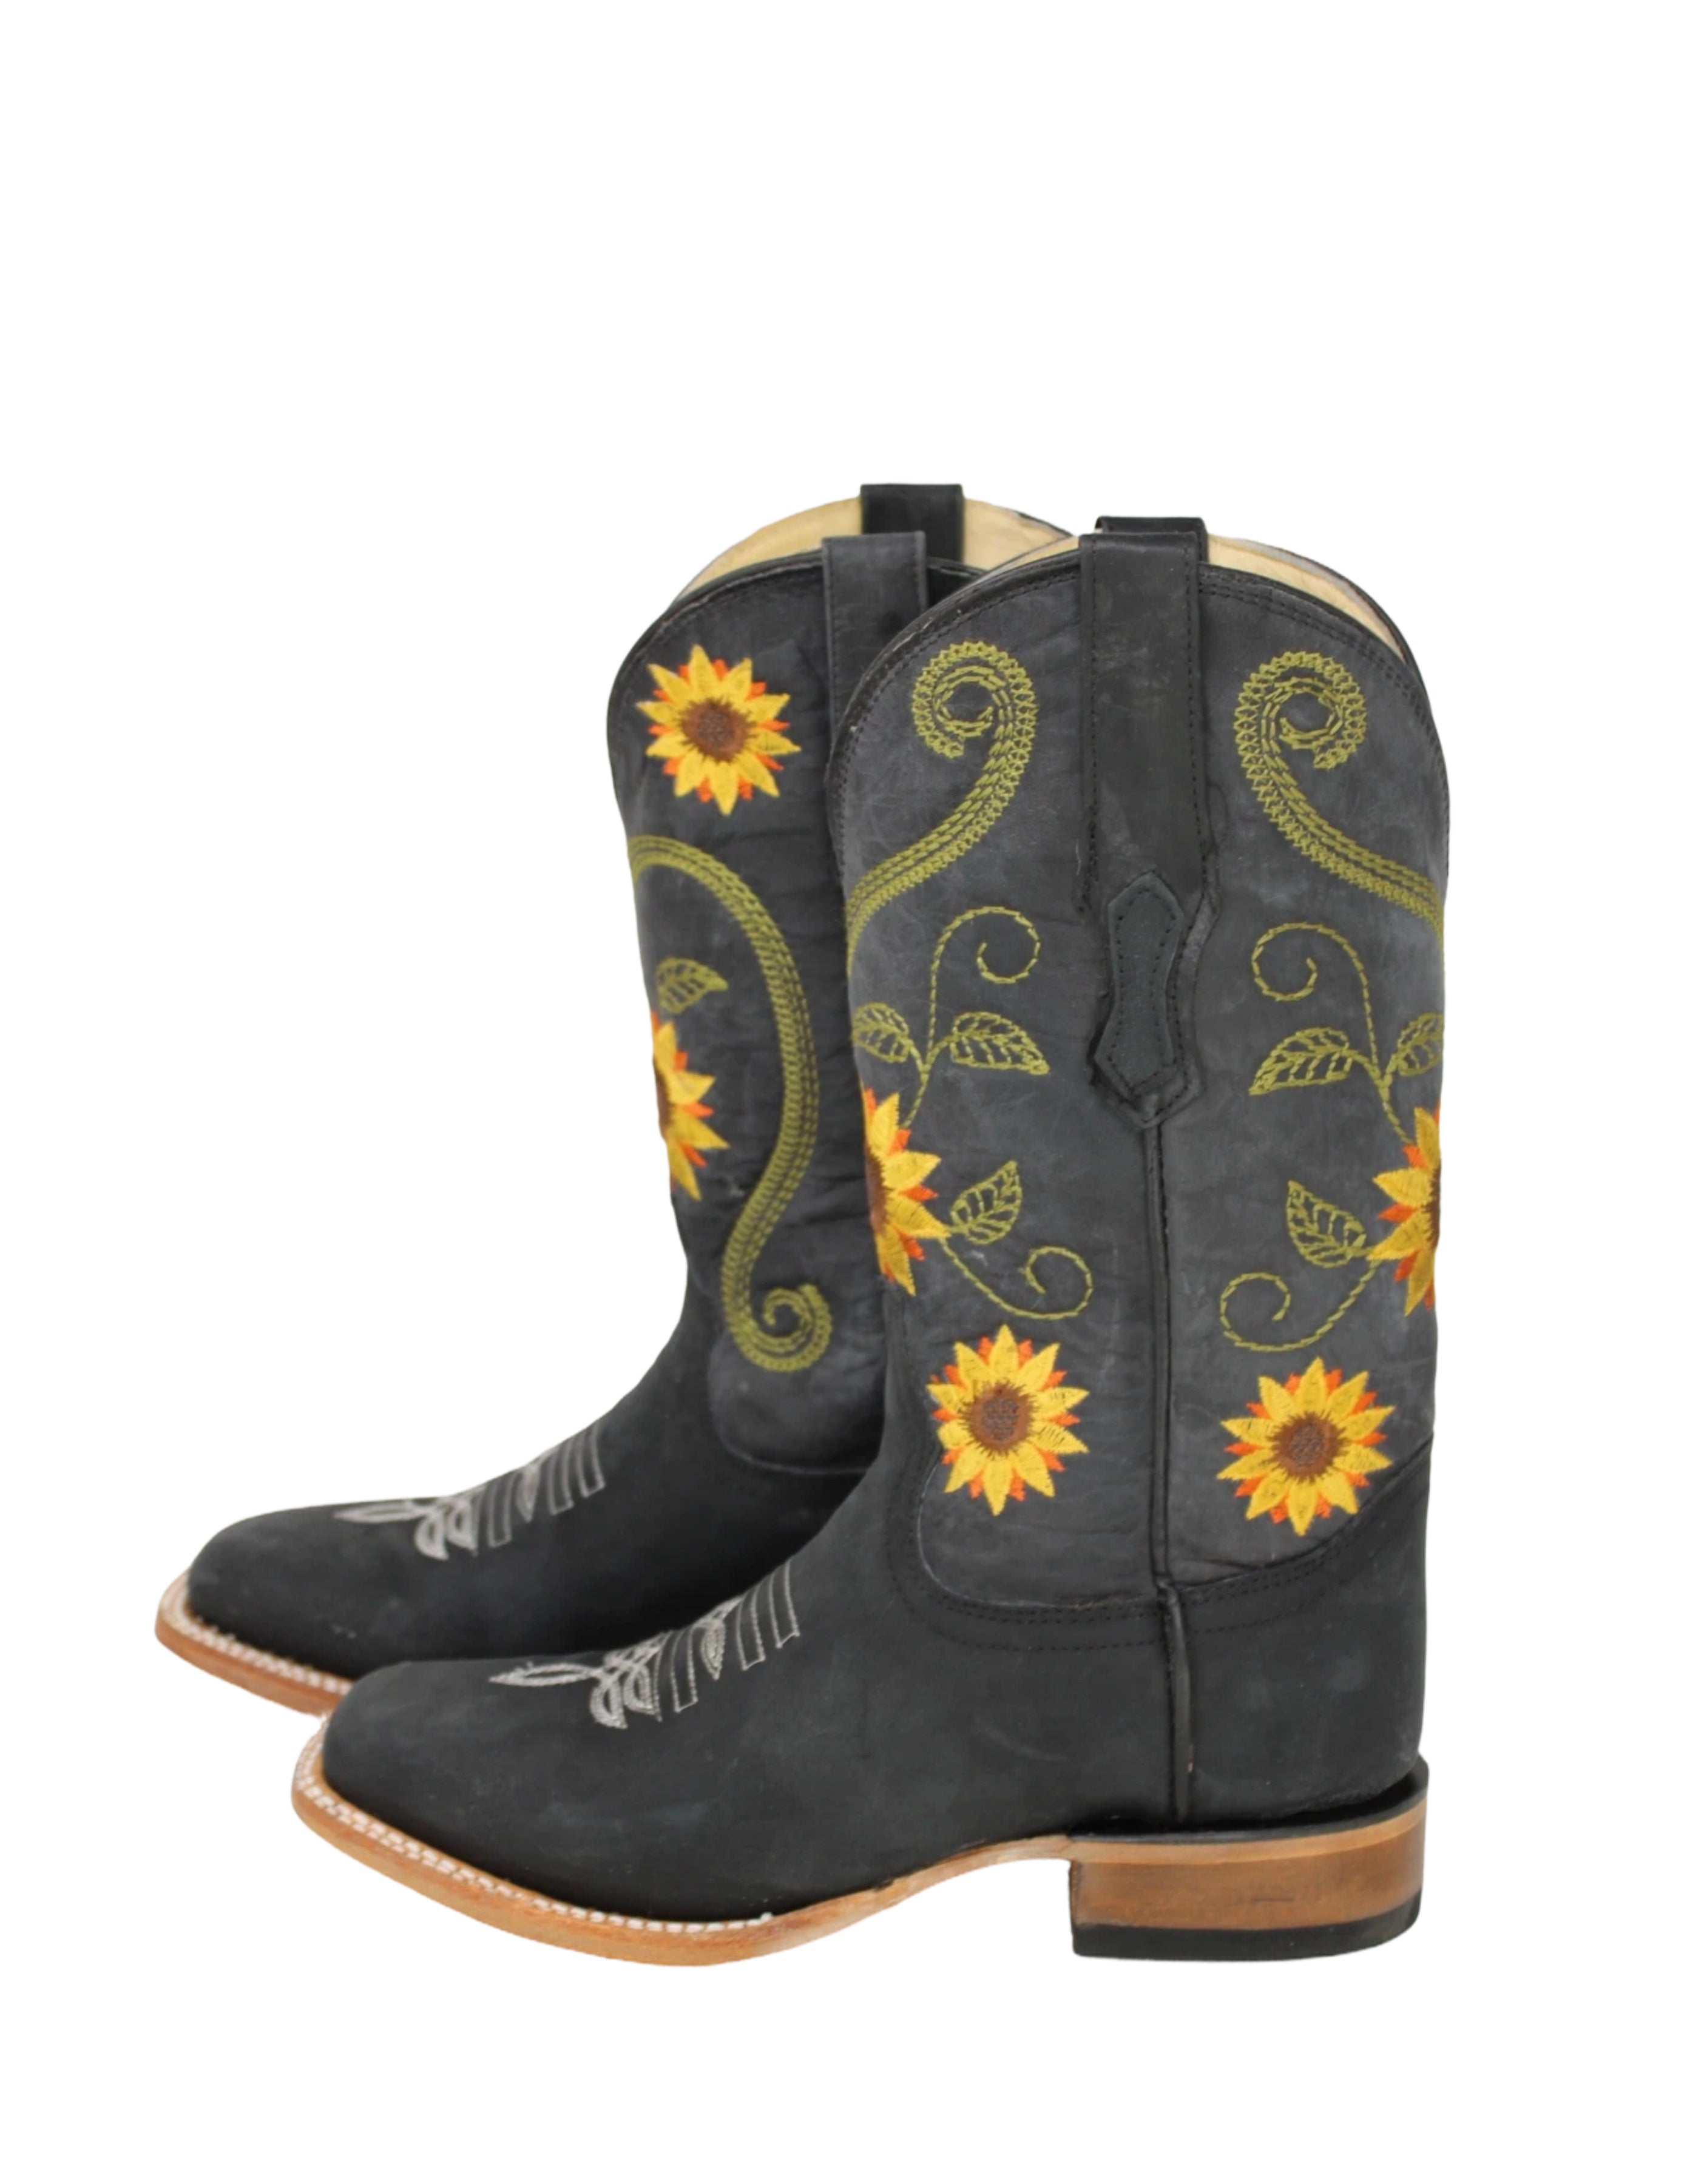 Emery Sunflower Boots